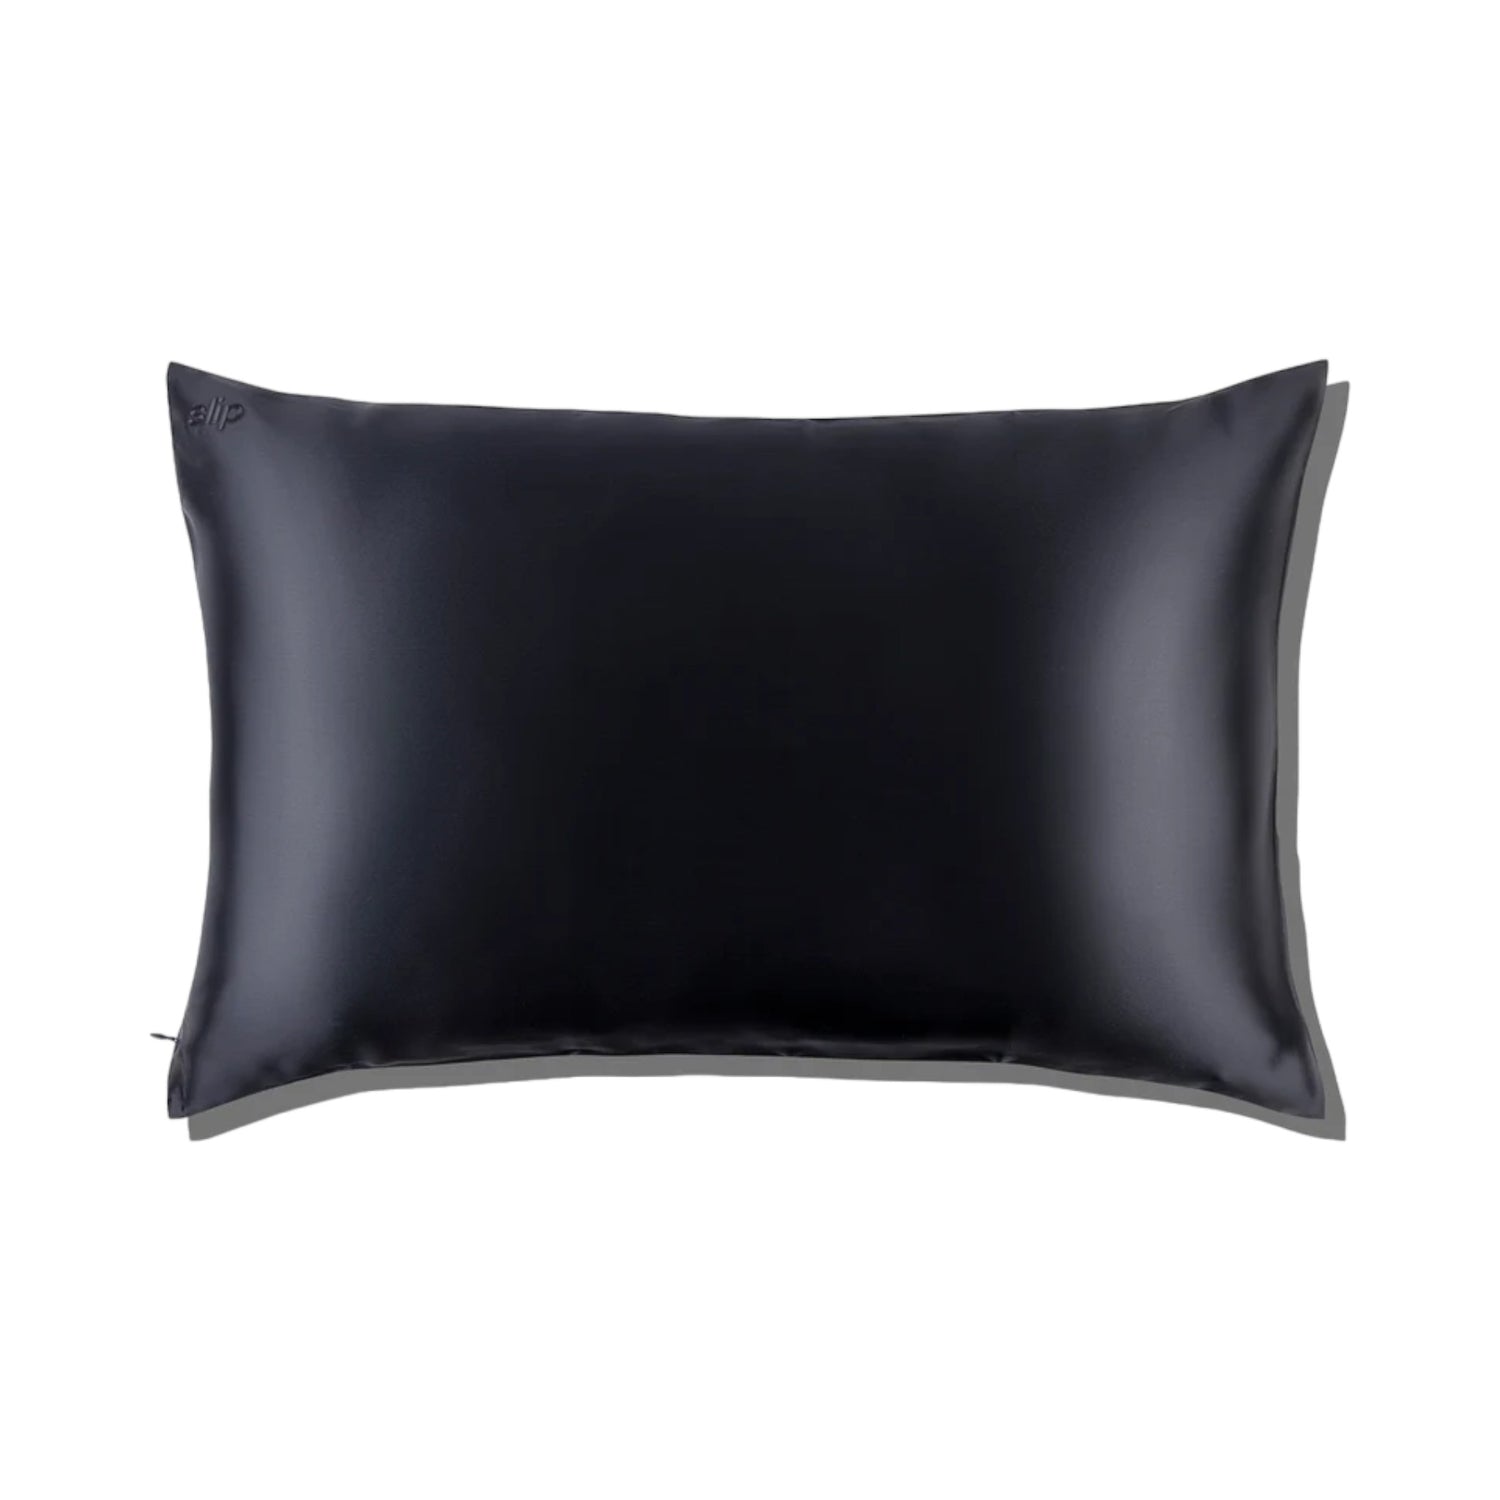 Pure Silk Pillowcase Queen - Black